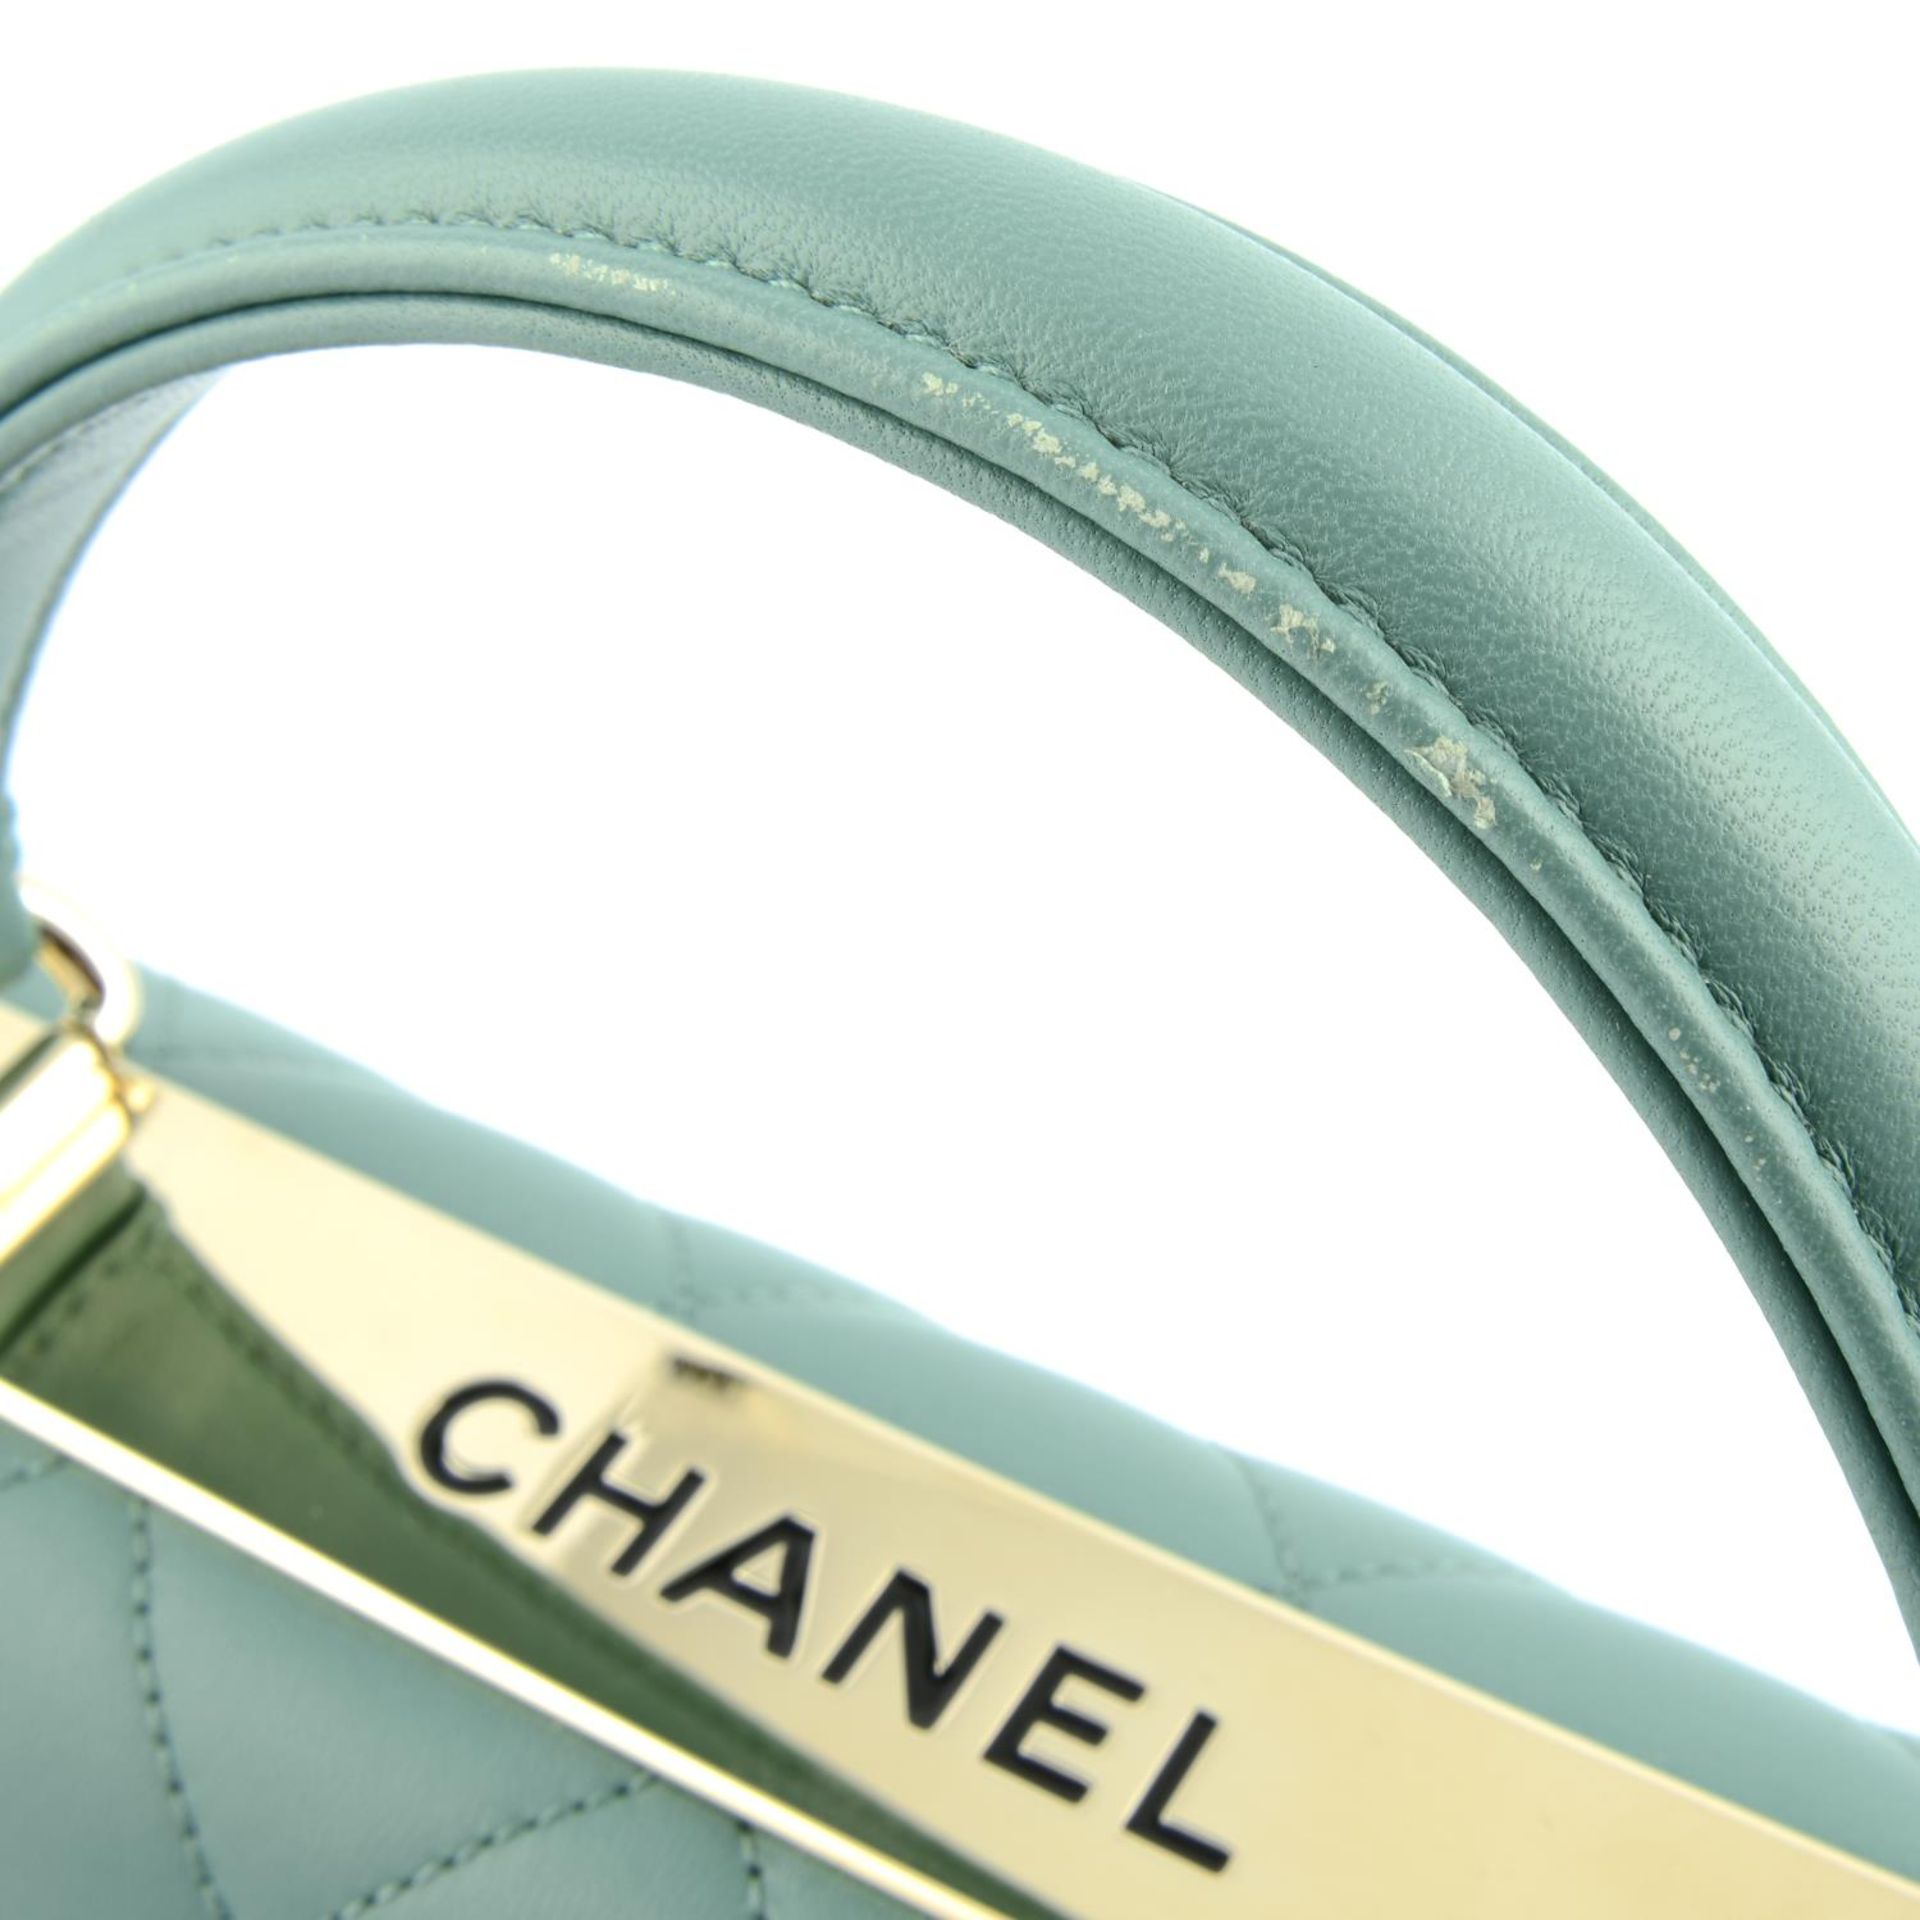 CHANEL - a small flap handbag. - Image 8 of 12